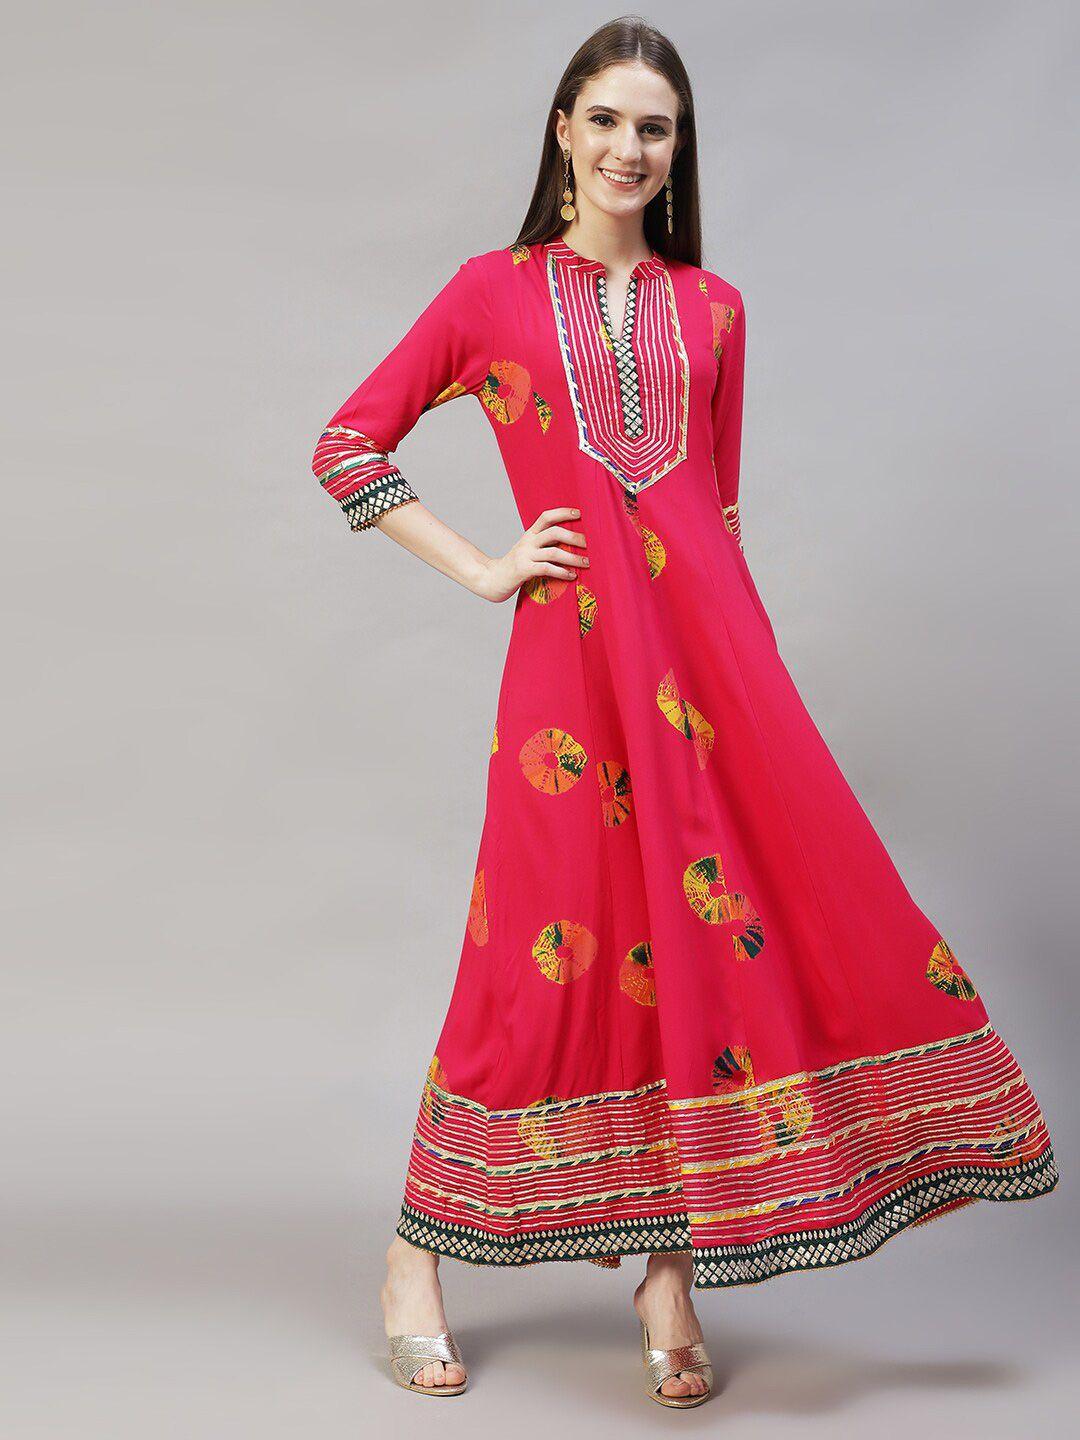 fashor-women-pink-ethnic-motifs-maxi-dress